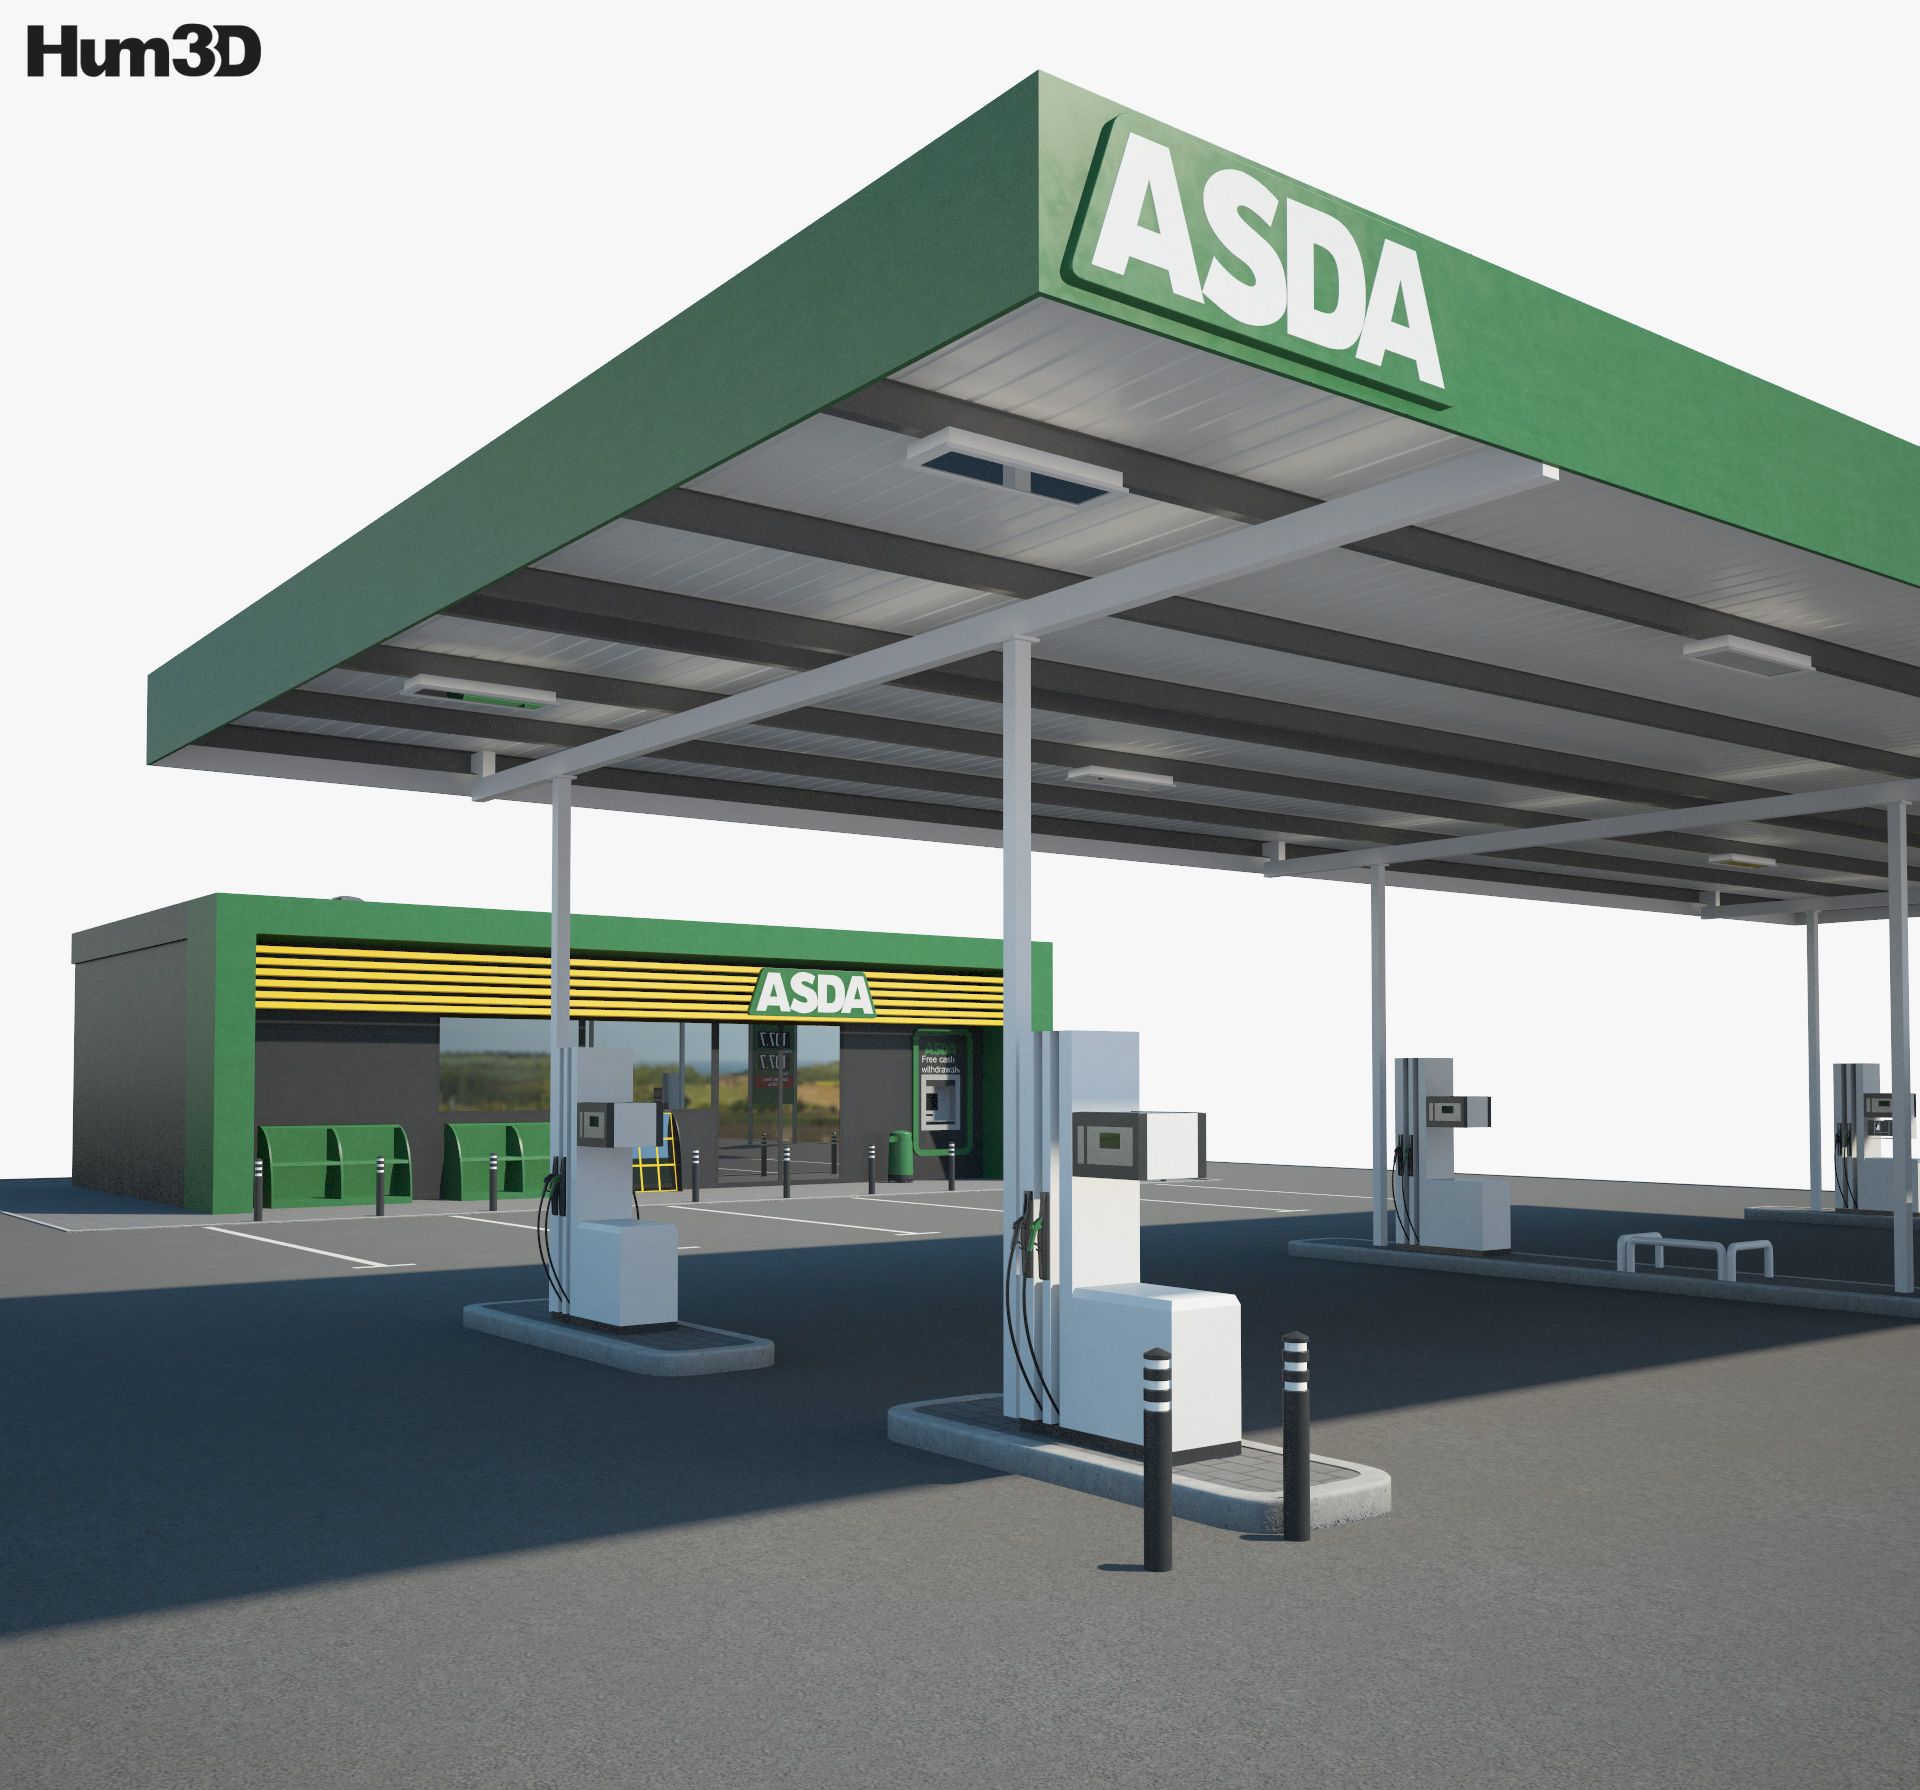 ASDA gas station 001 3d model